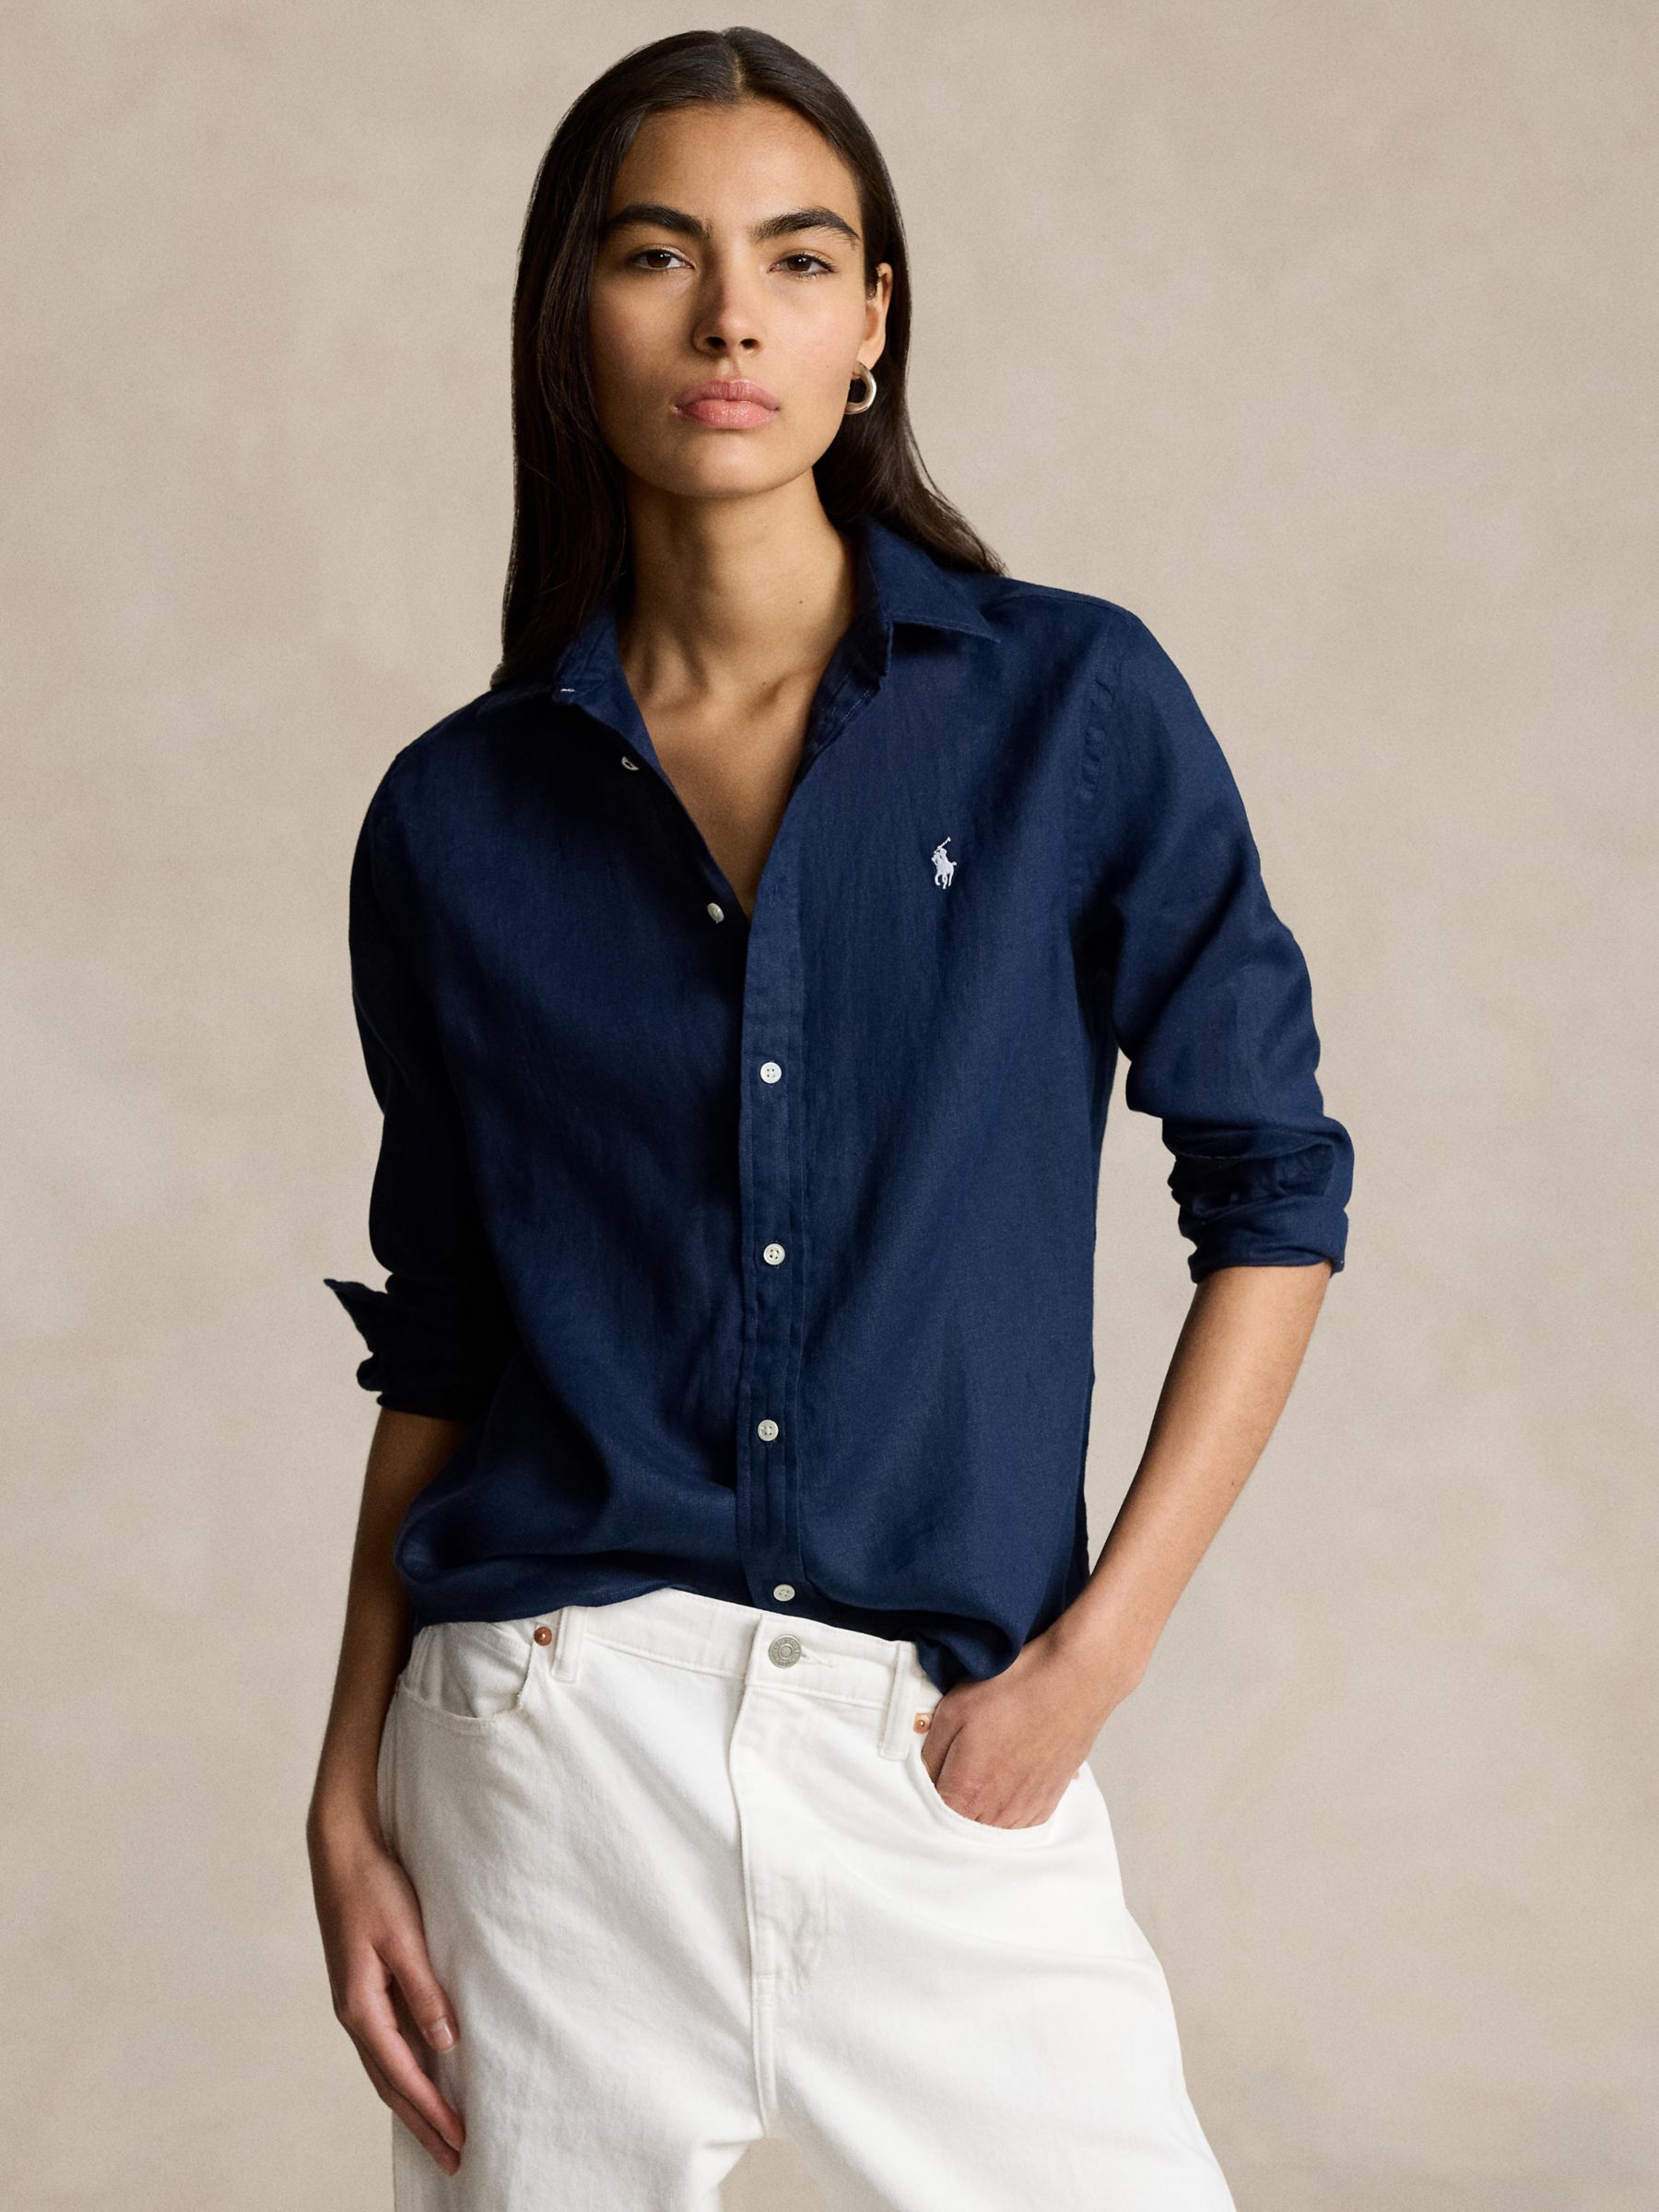 Ralph Lauren Short Sleeve Geometric Lace Polo Shirt